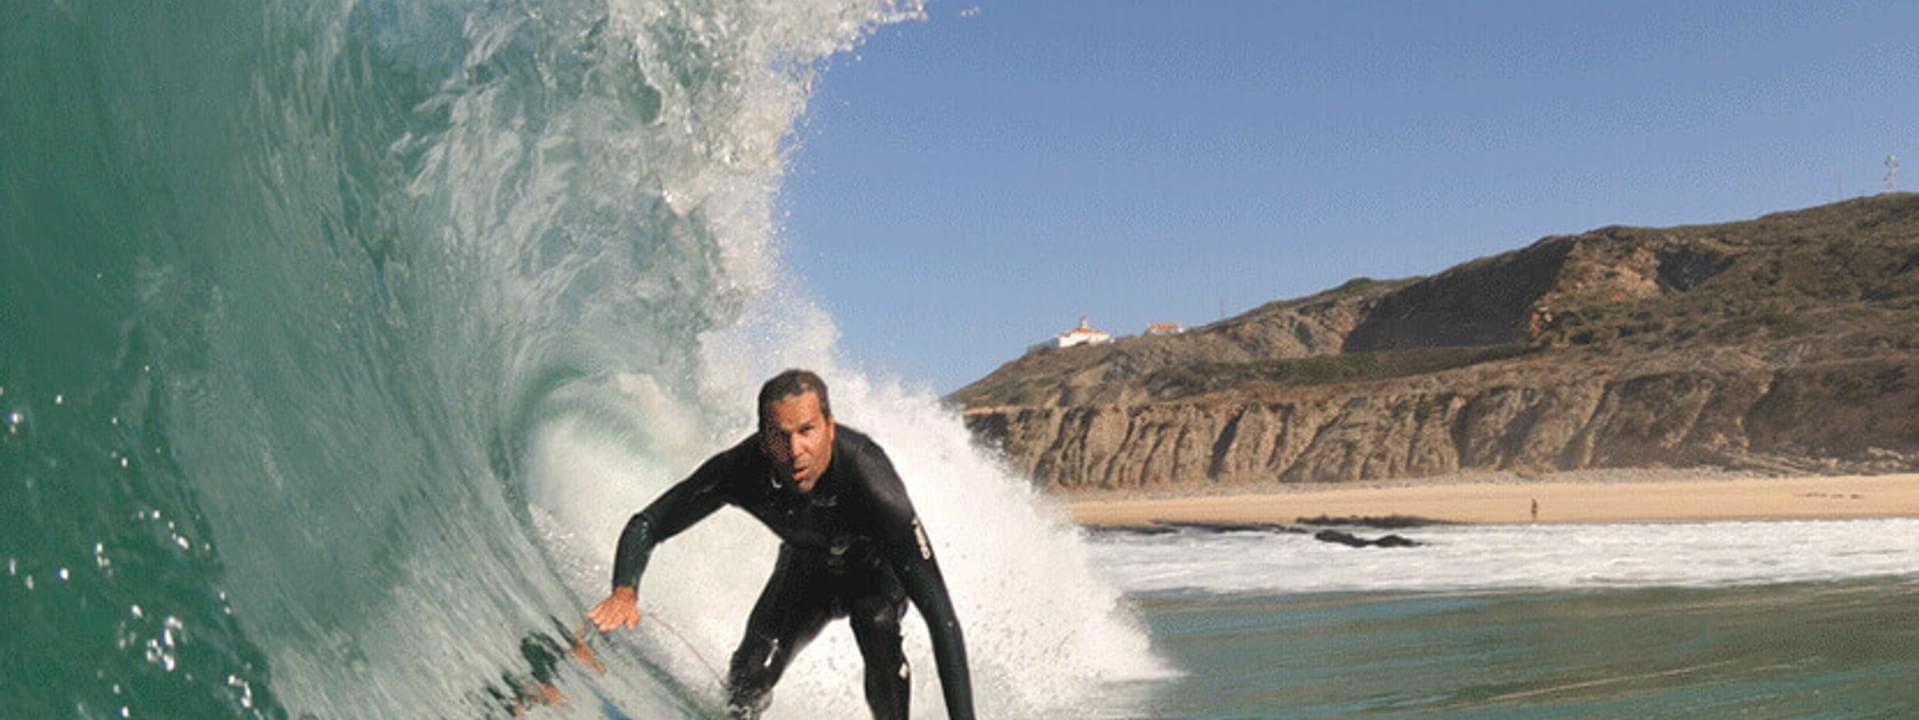 Surfer à Figueira da Foz: la meilleure droite d'Europe!